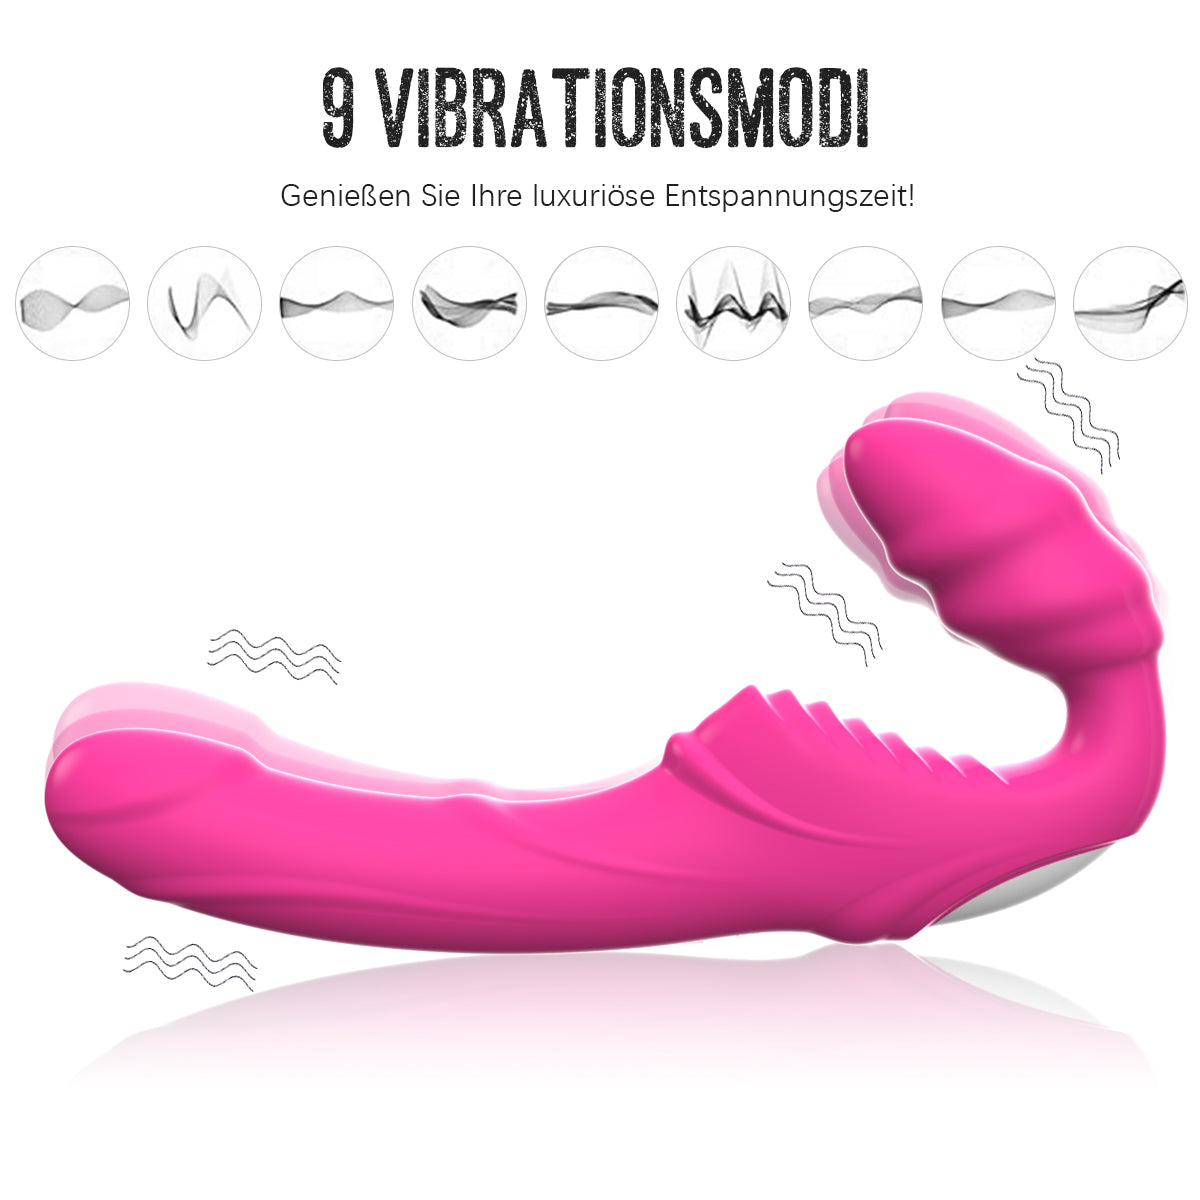 Stark Klitoris und G-Punkt Vibrator mit Heizbar Analvibrator Dualer Motor Dildo sextoy Sexspielzeug für Frauen Paare 9leise Vibrationsmodi